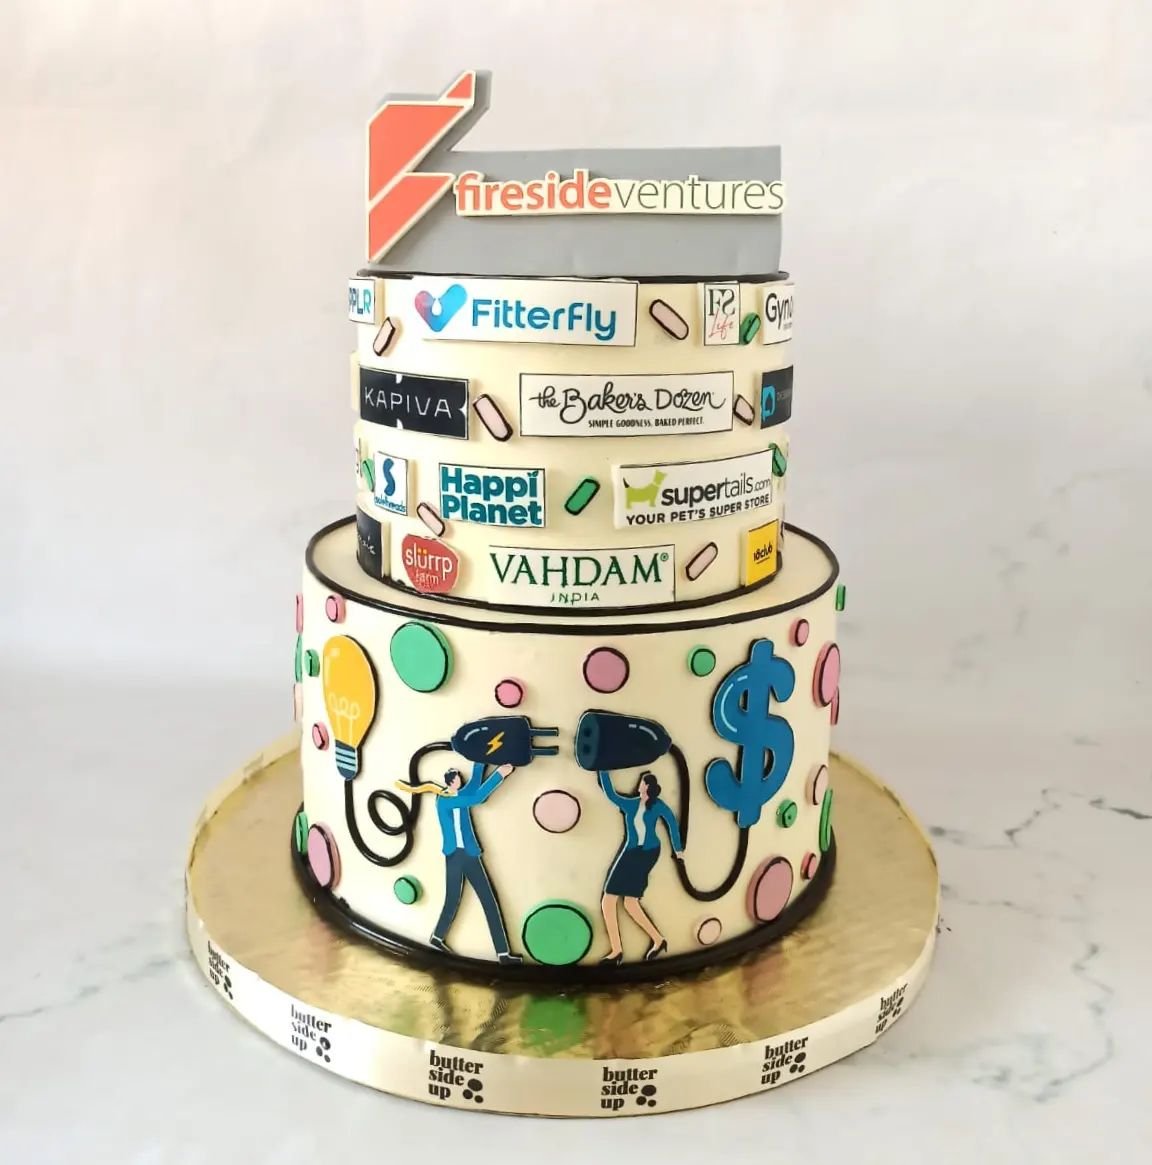 Corporate cake -  celebrating milestones! 

[ buttercream cakes, edible prints]